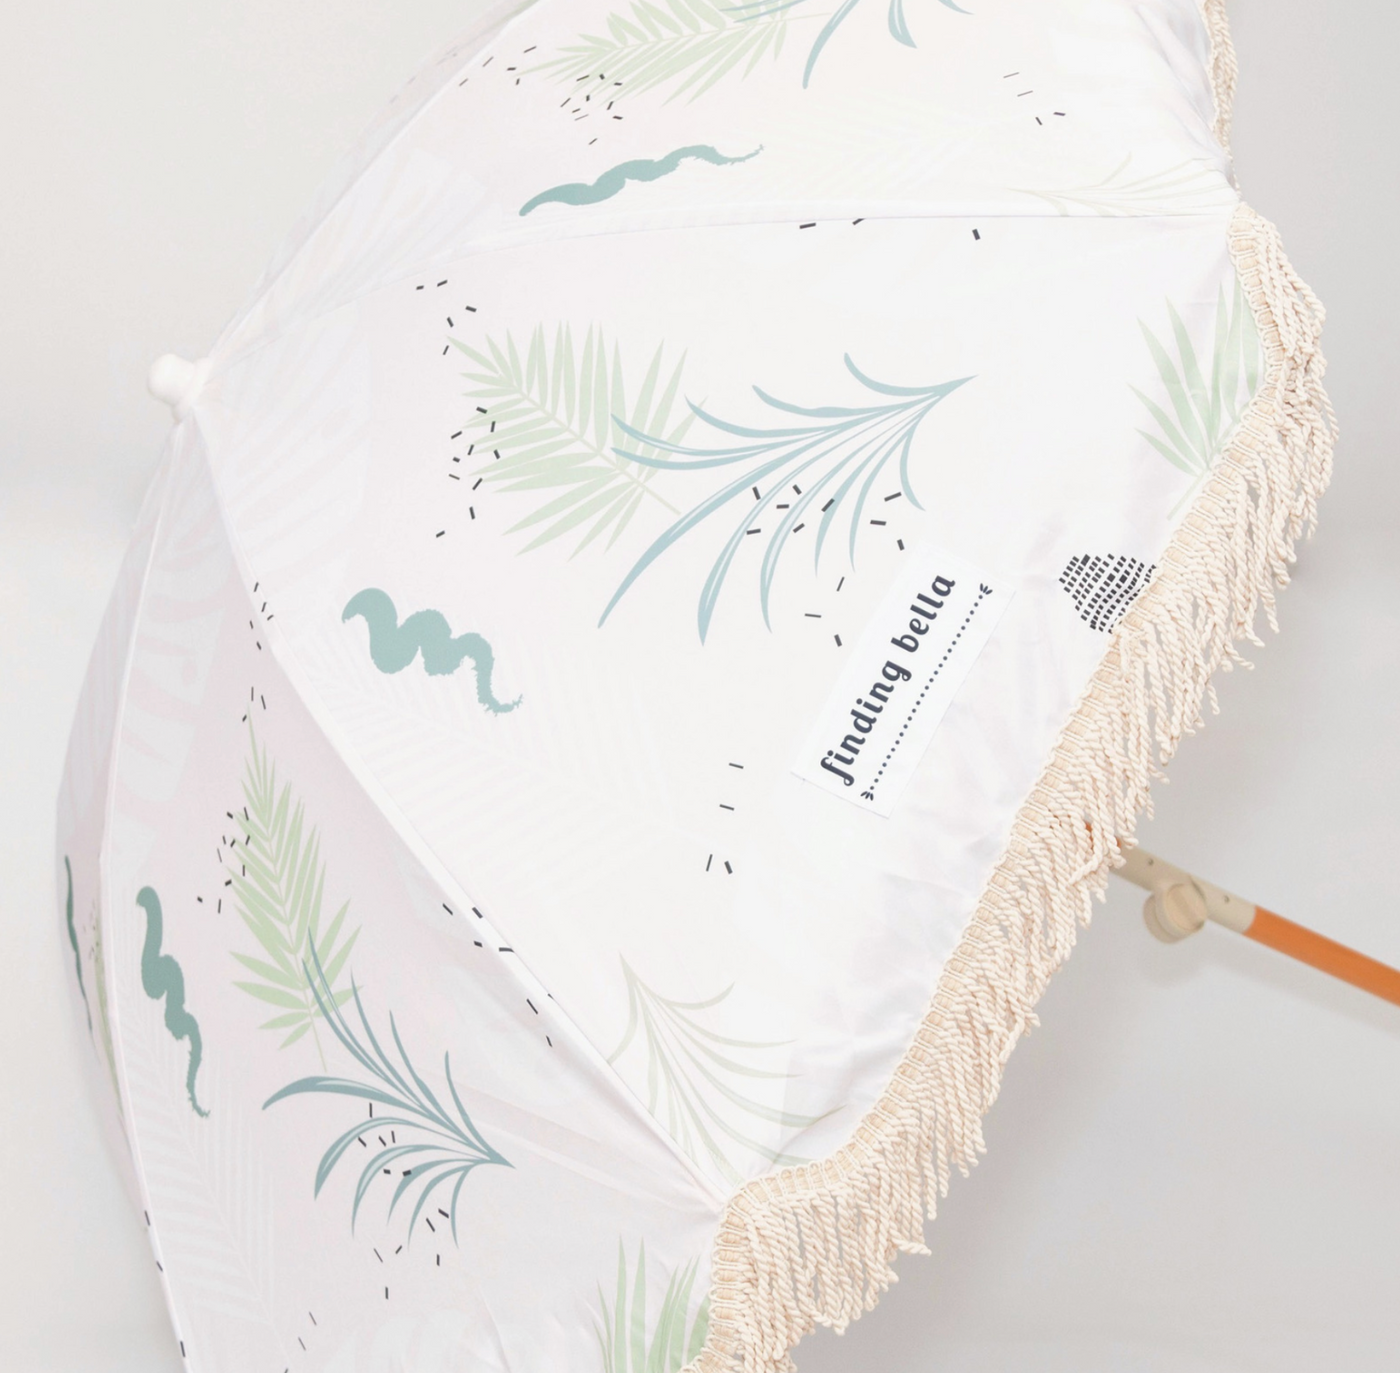 Oasis Beach Umbrella